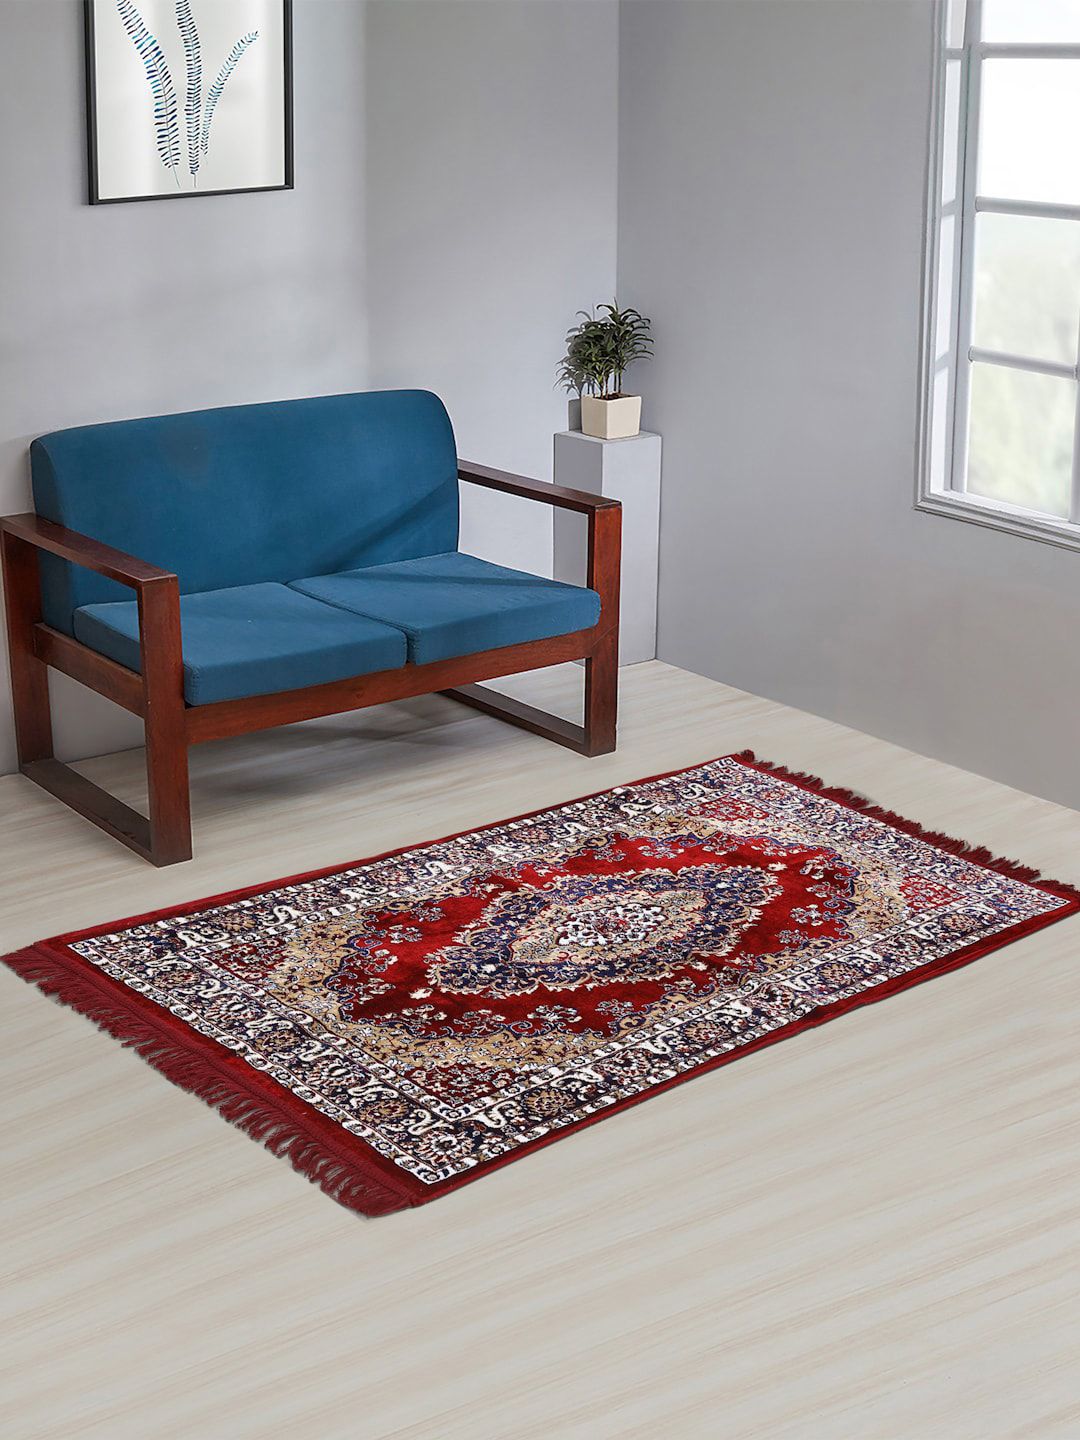 KLOTTHE Maroon Floral Patterned Rectangular Carpet Price in India